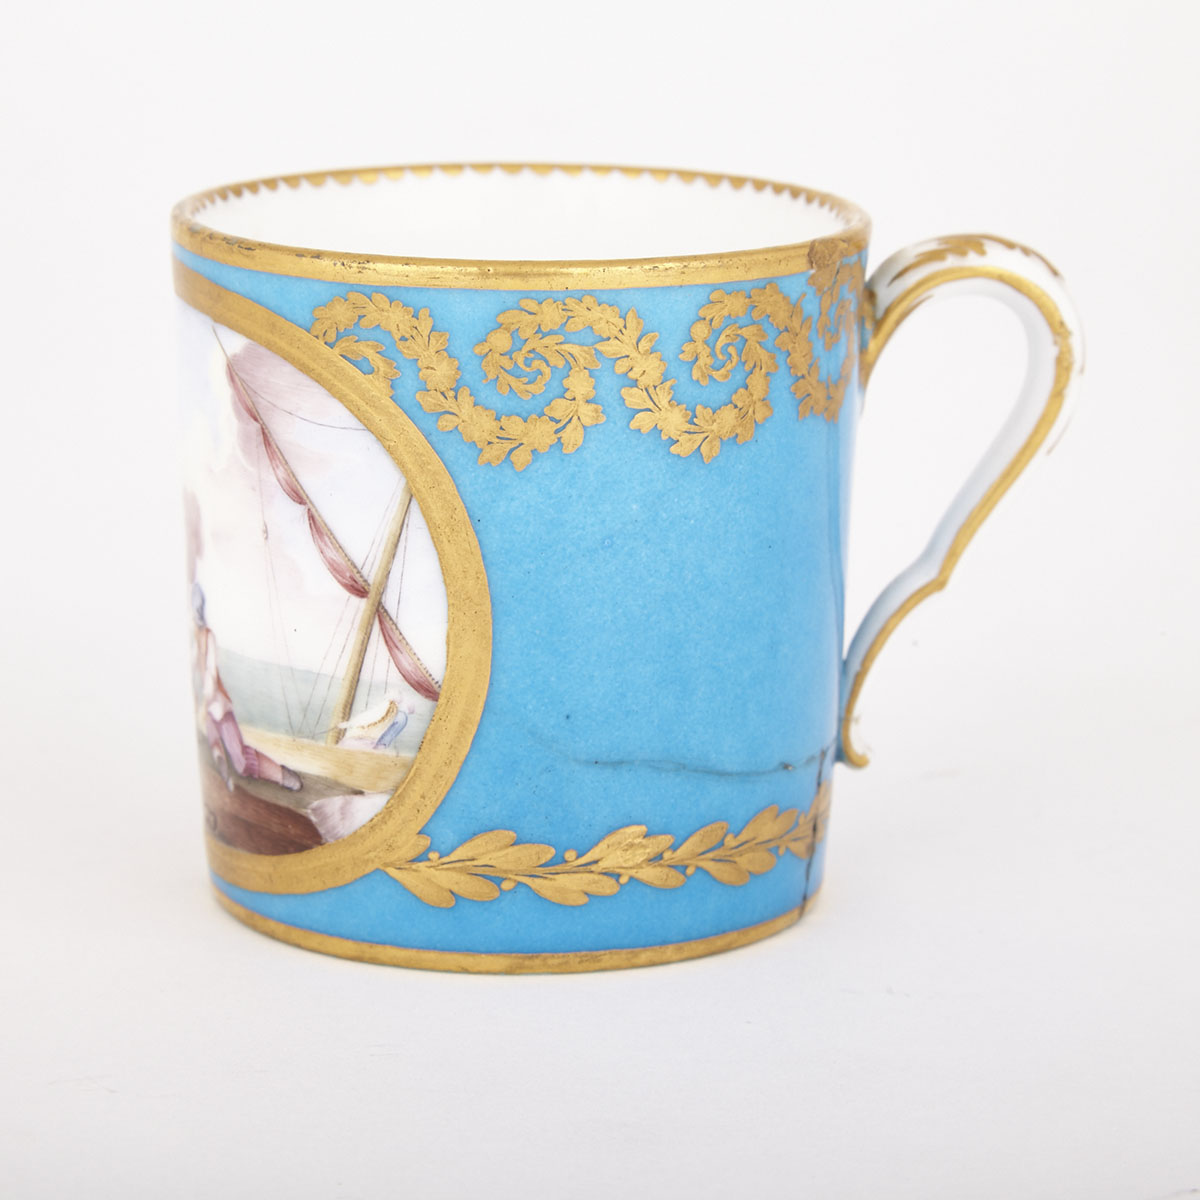 Sèvres Bleu Celeste Ground Cup, 18th/19th century